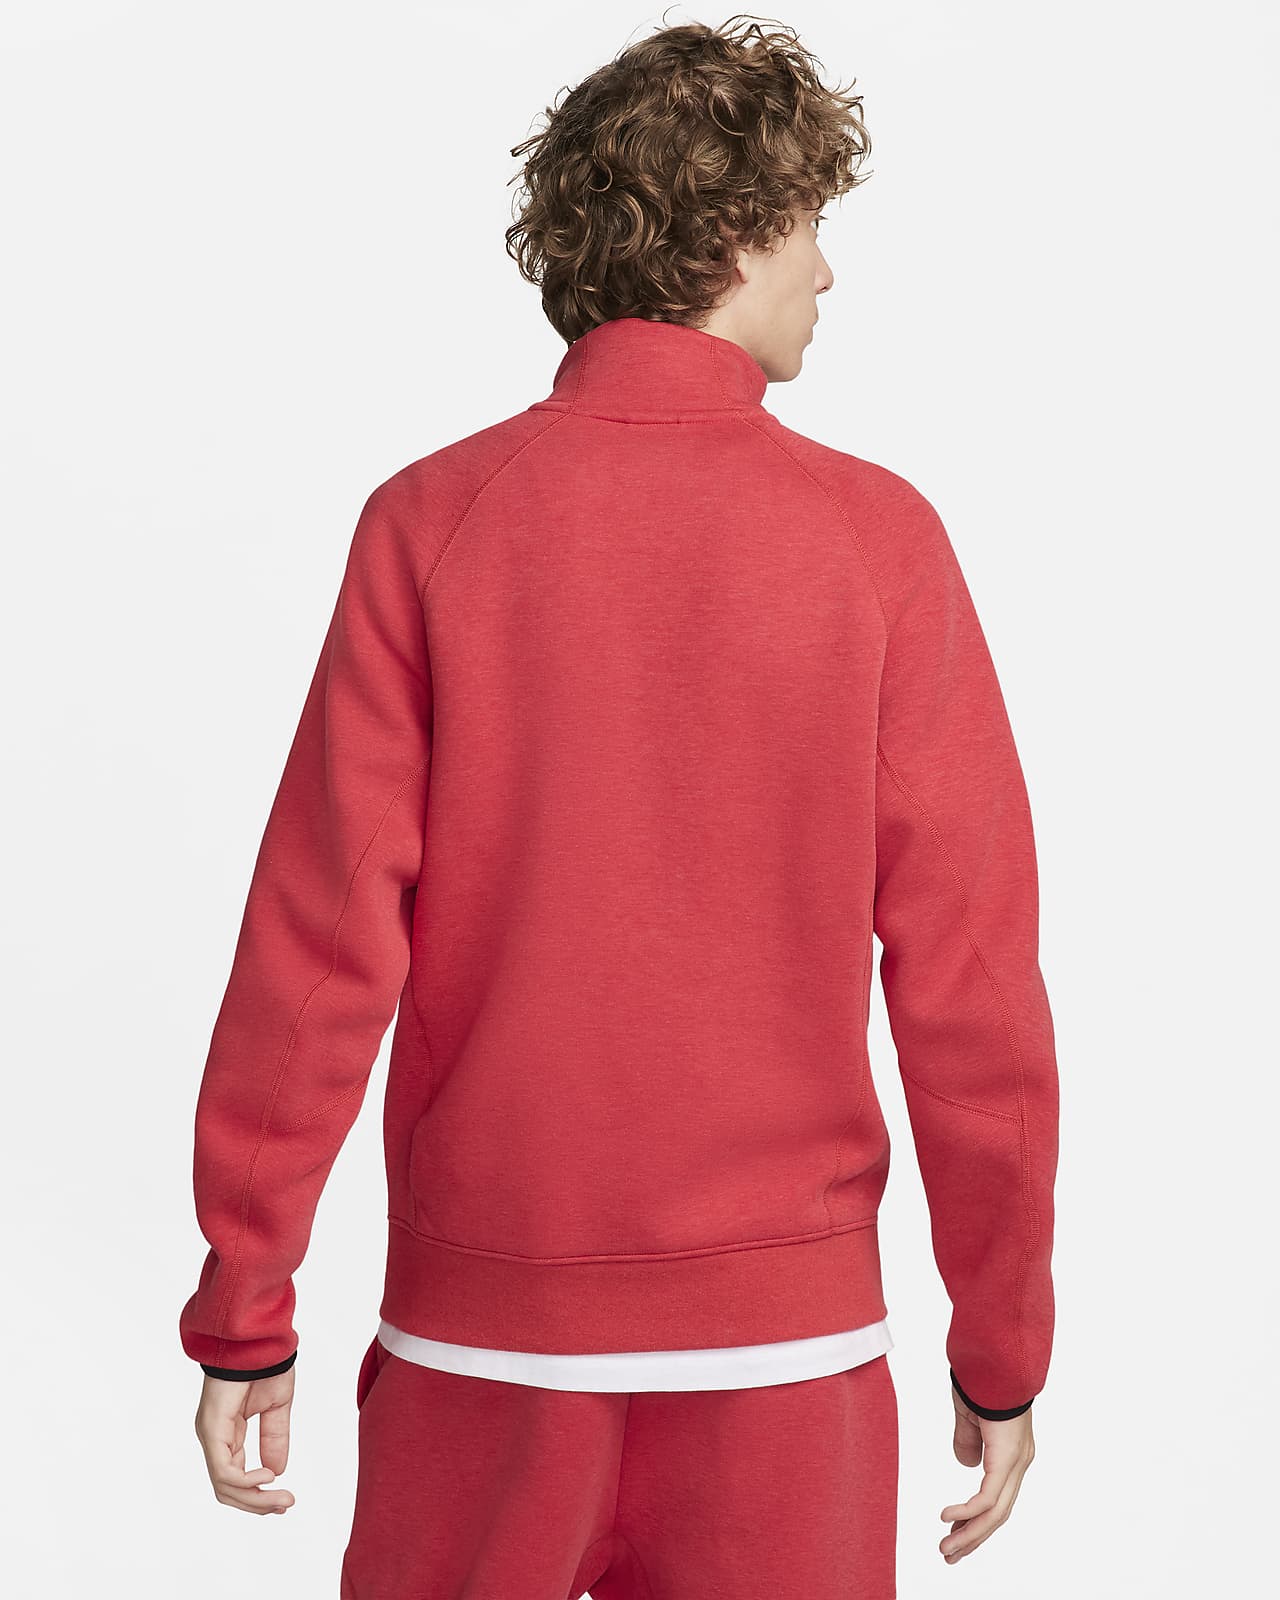 Logo Athletic Men's Sweatshirt - Red - XL